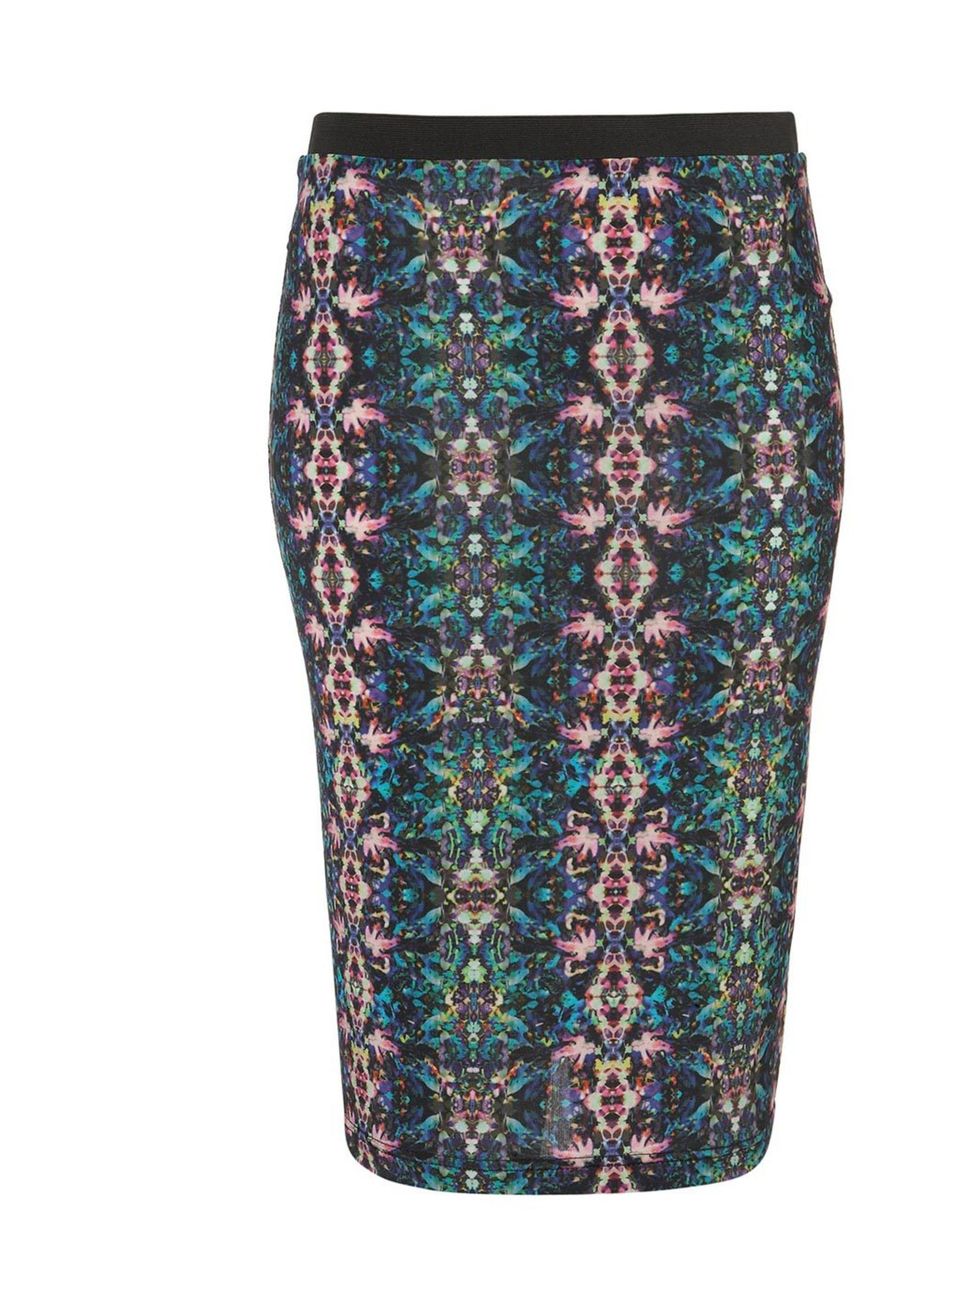 <p>Topshop kaleidoscope print skirt, £28</p><p><a href="http://shopping.elleuk.com/browse?fts=topshop+kaleidoscope+skirt">BUY NOW</a></p>